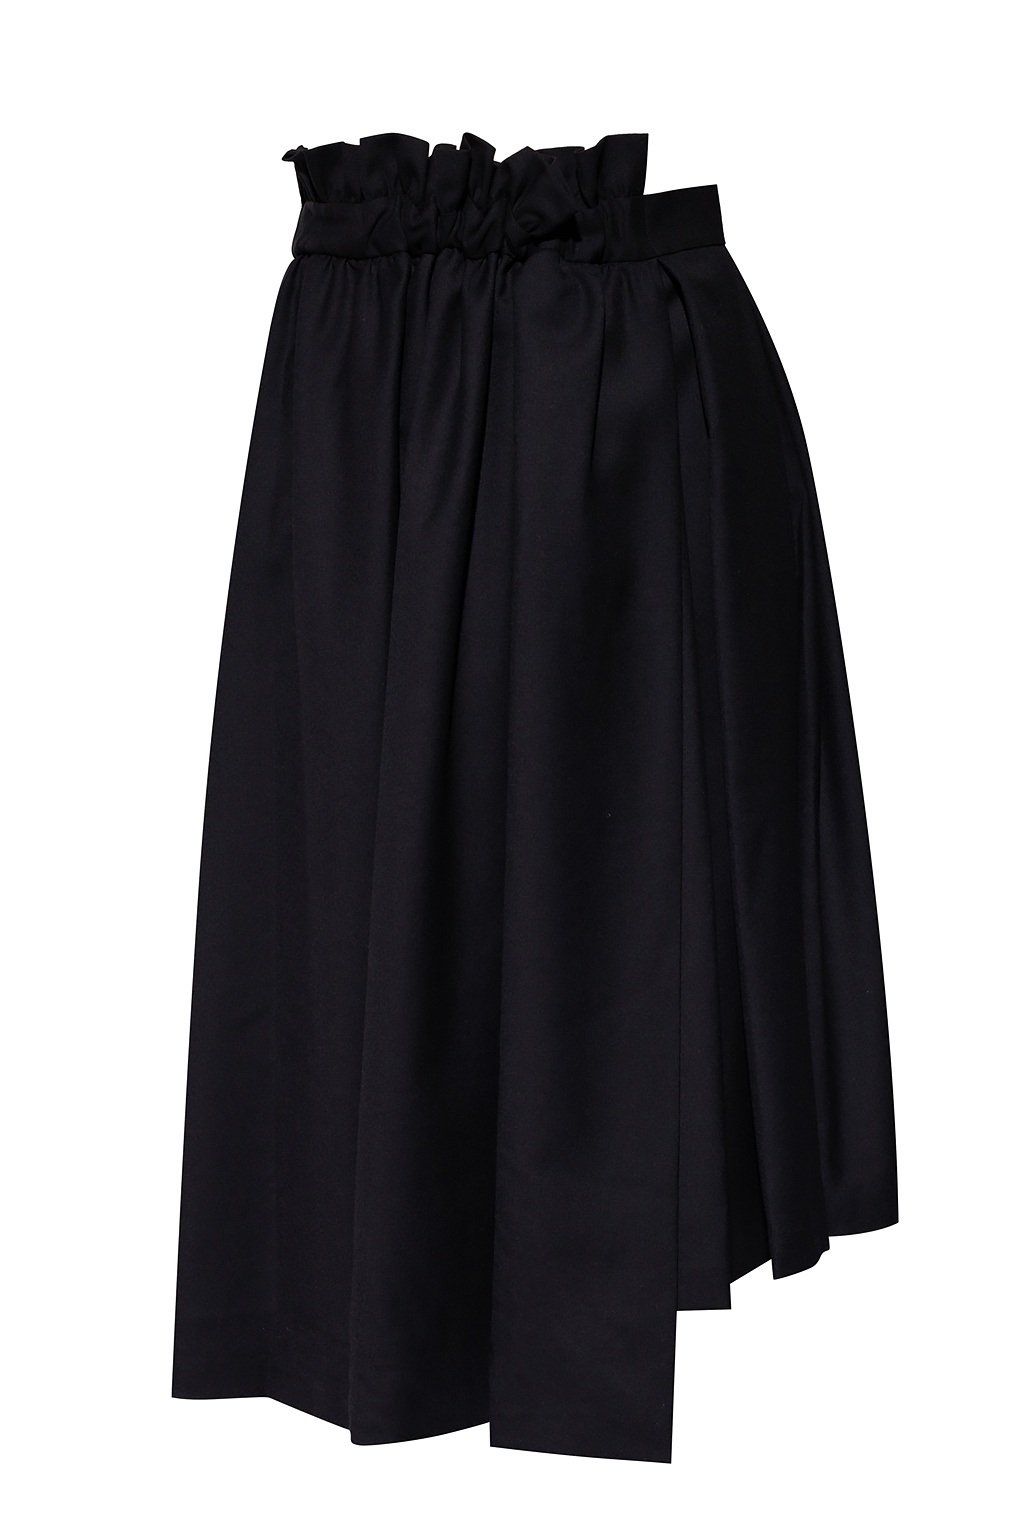 Comme des Garcons Ninomiya Wrap-over skirt